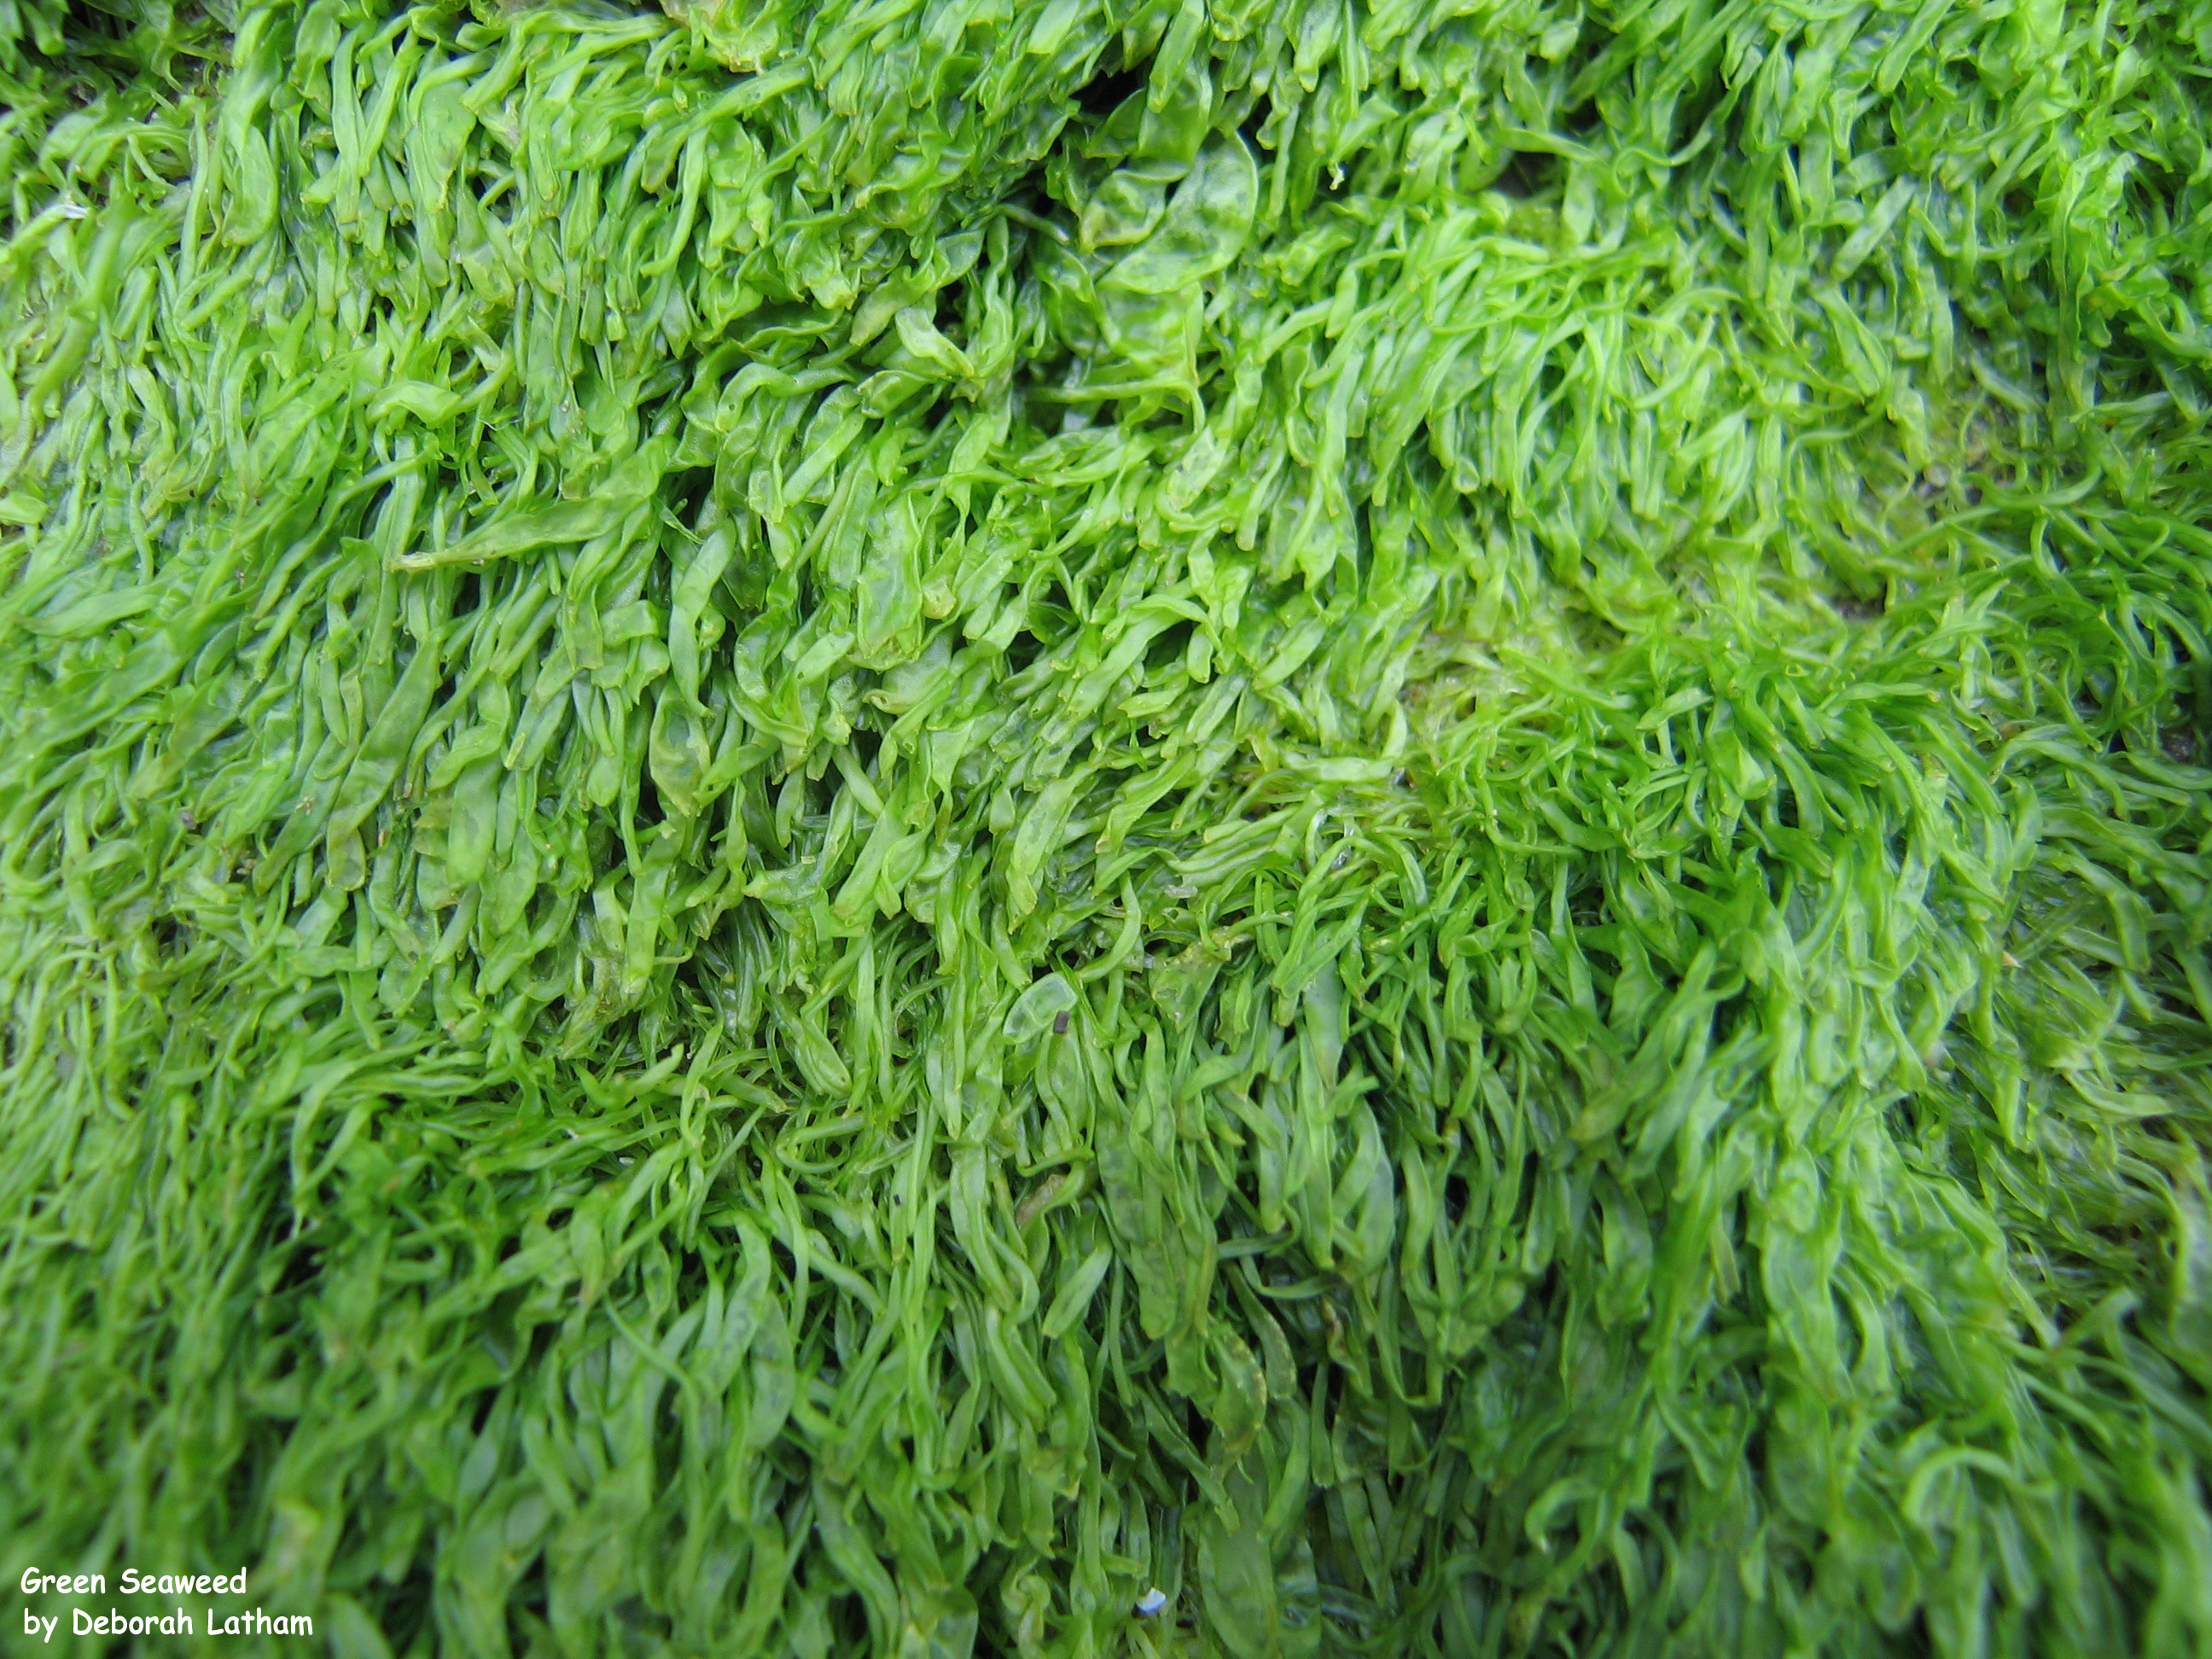 Green Seaweed: NEN Gallery